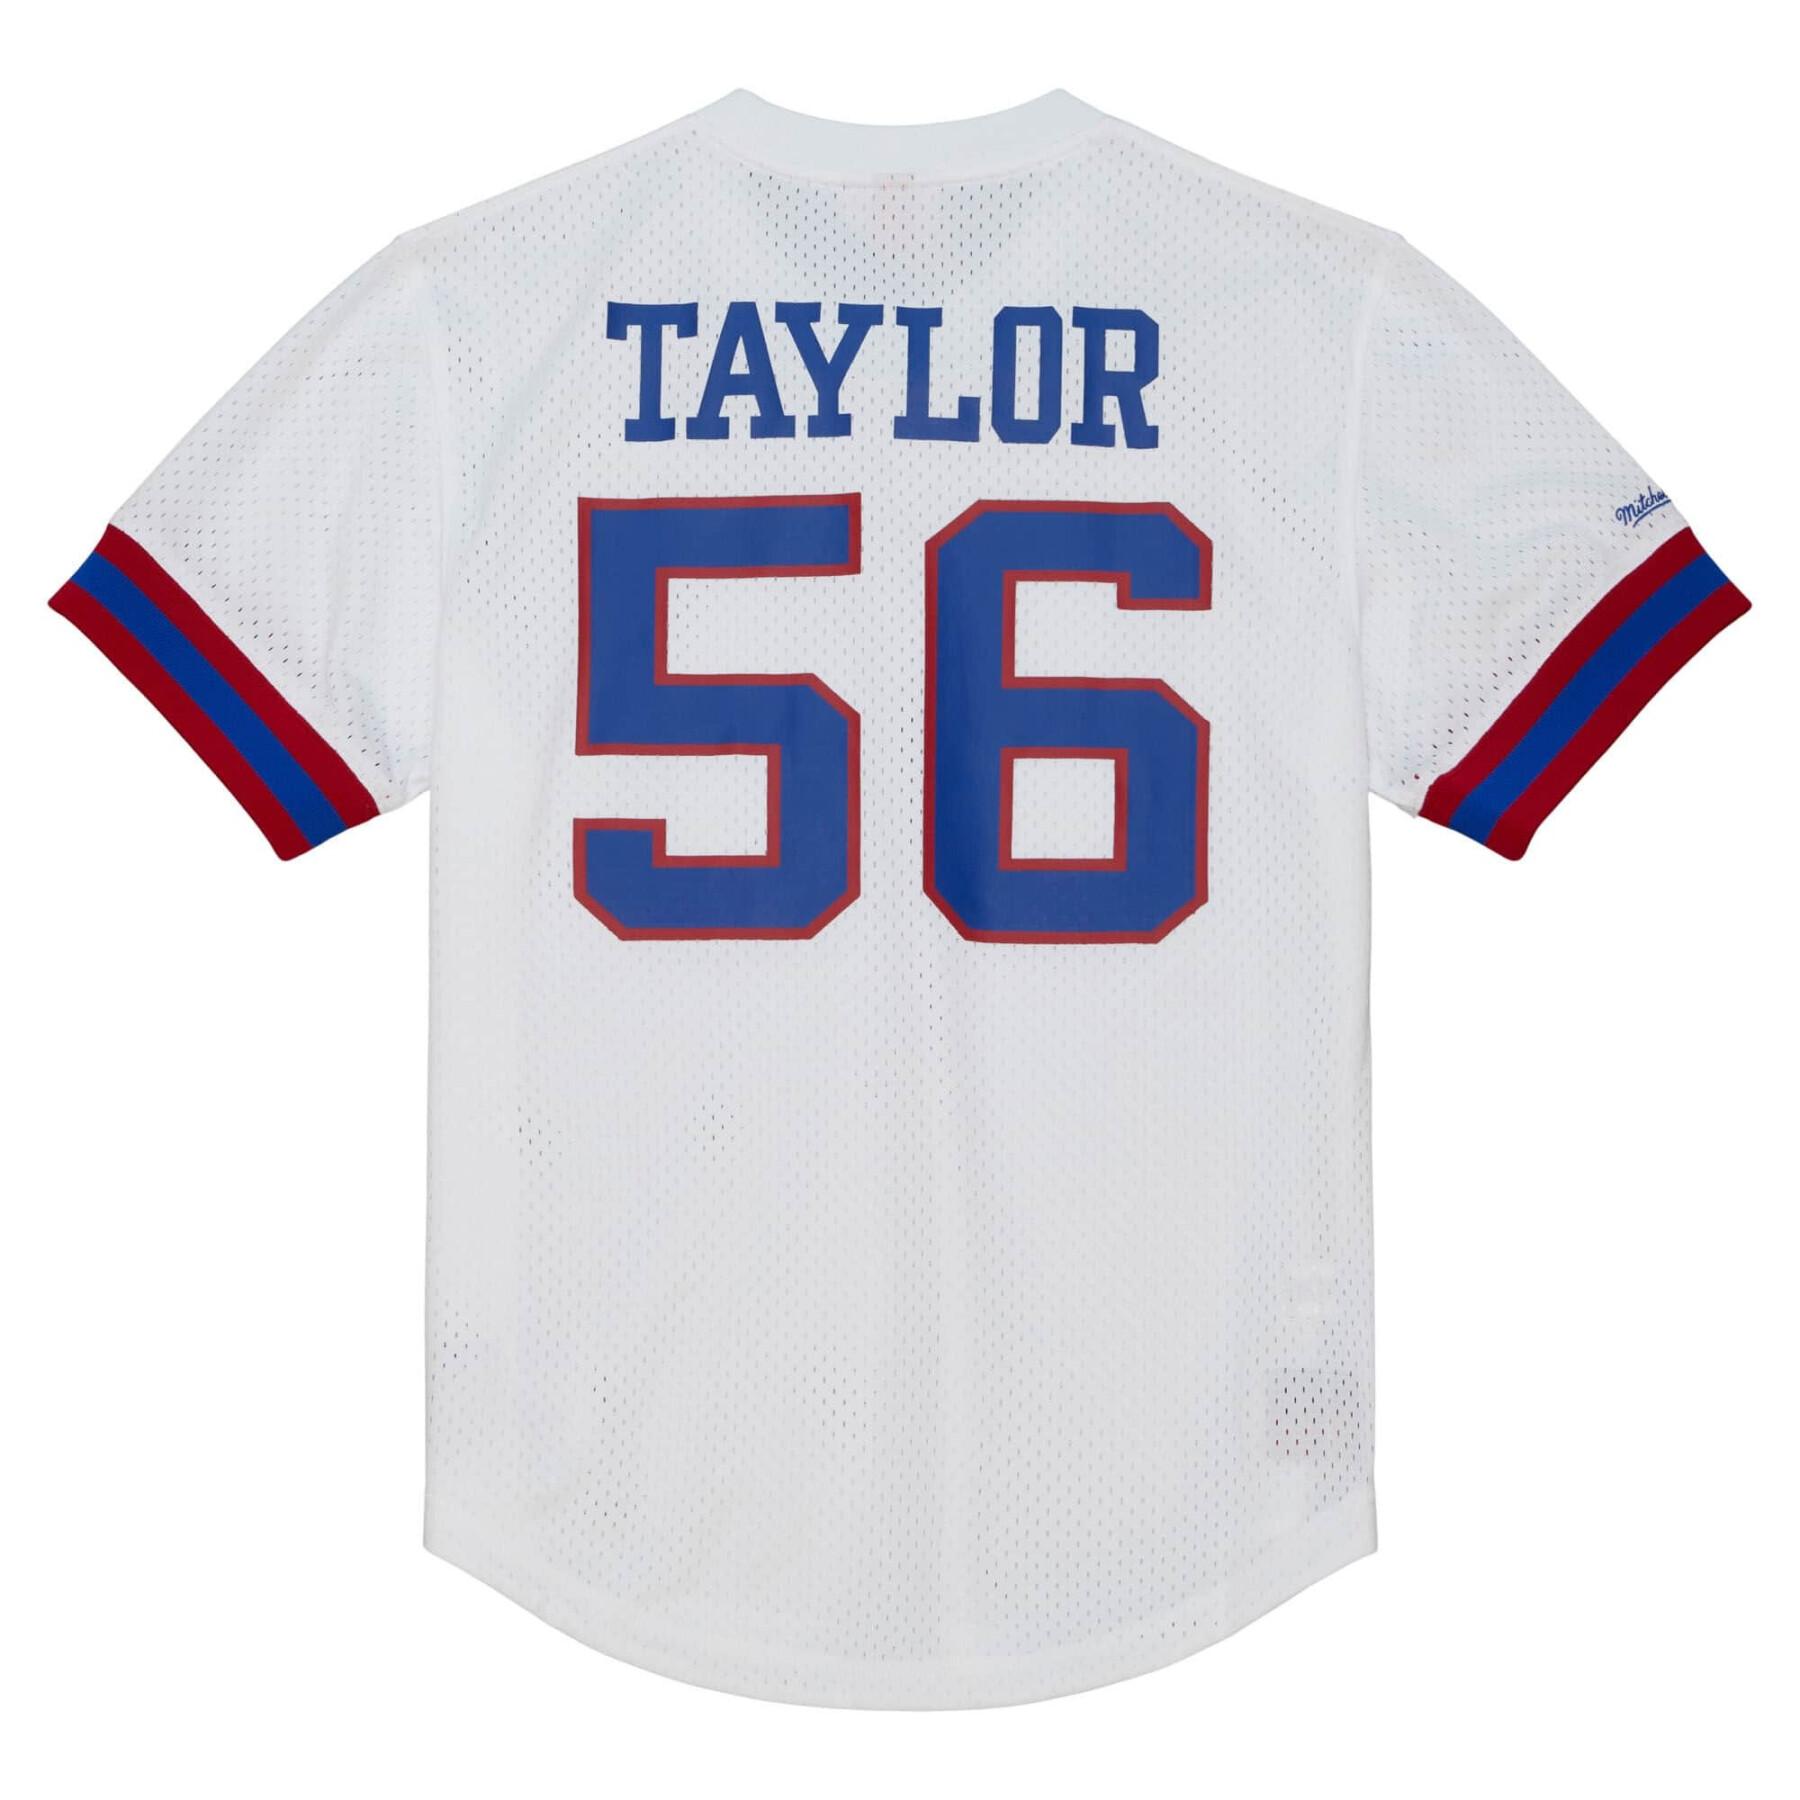 Camisola com gola redonda New York Giants NFL N&N 1986 Lawrence Taylor